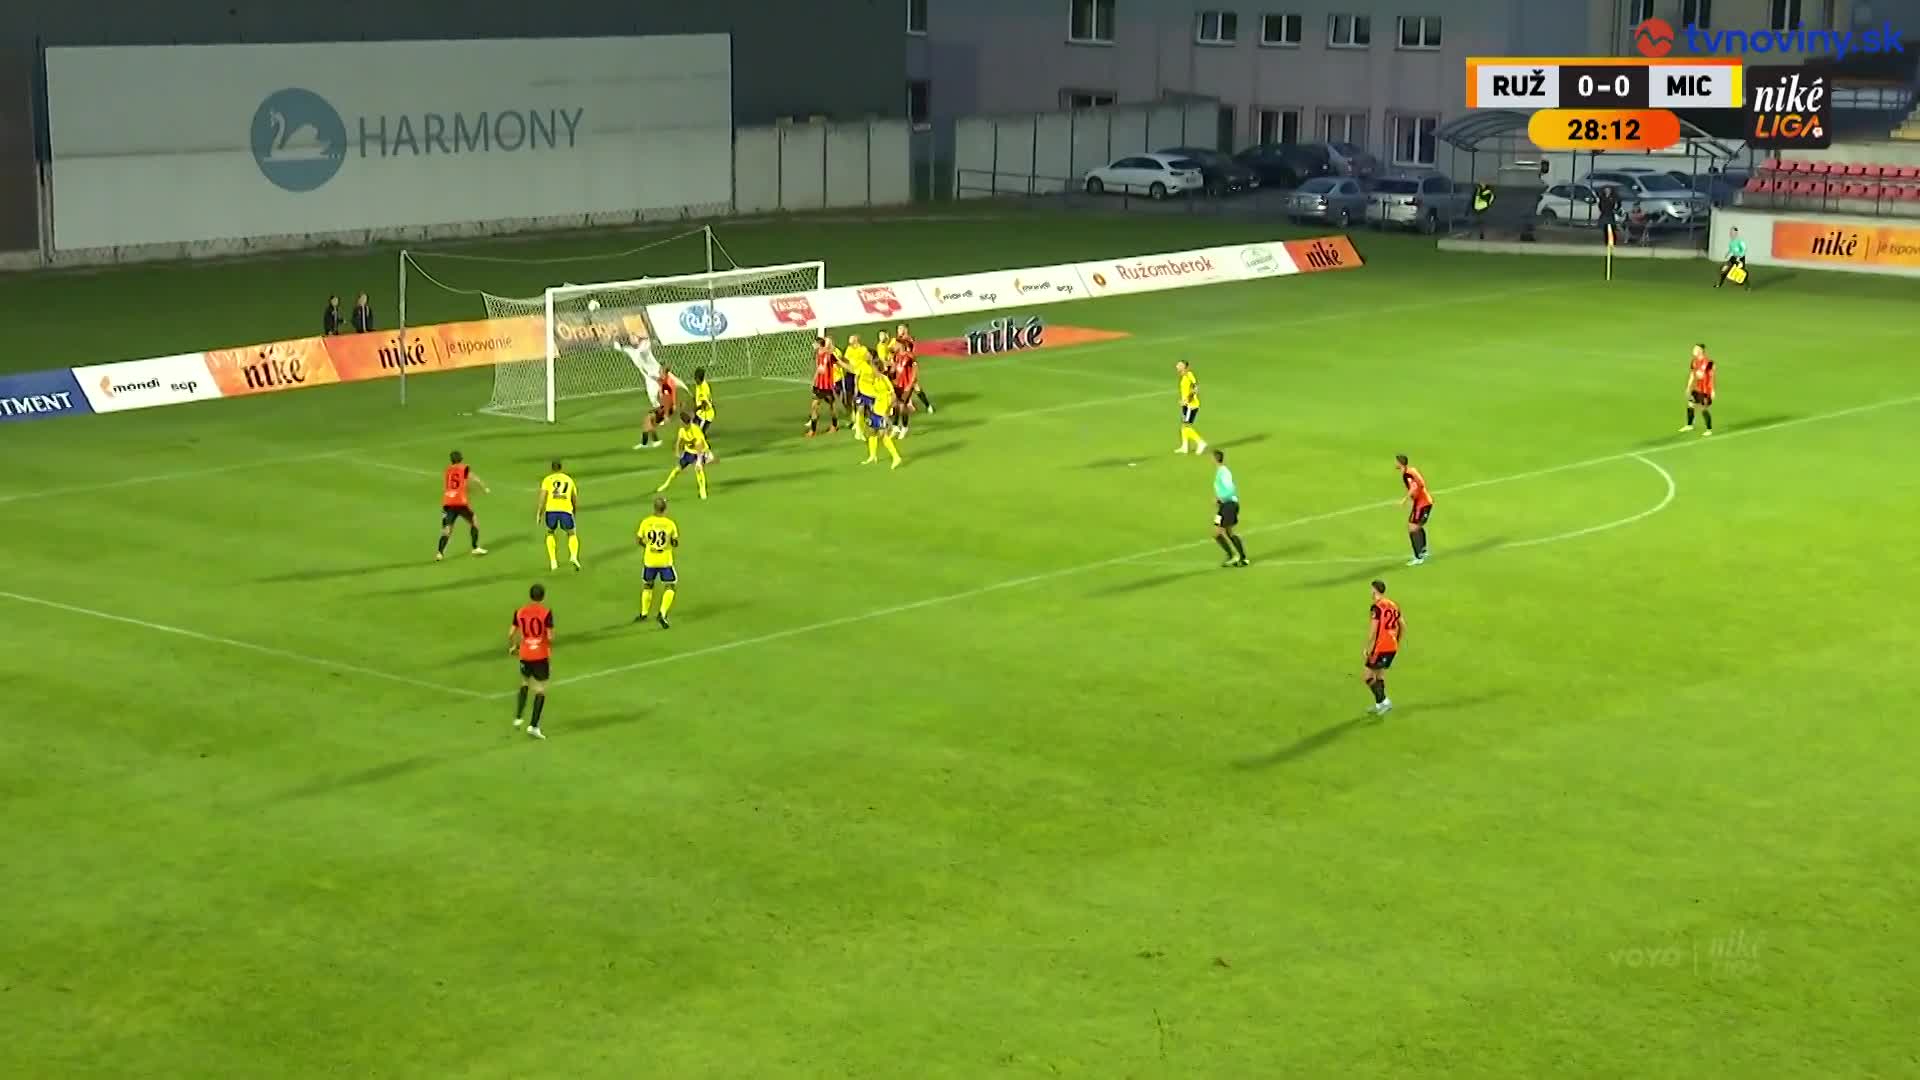 RUŽOMBEROK - MICHALOVCE 0:0 (9. kolo Niké ligy)